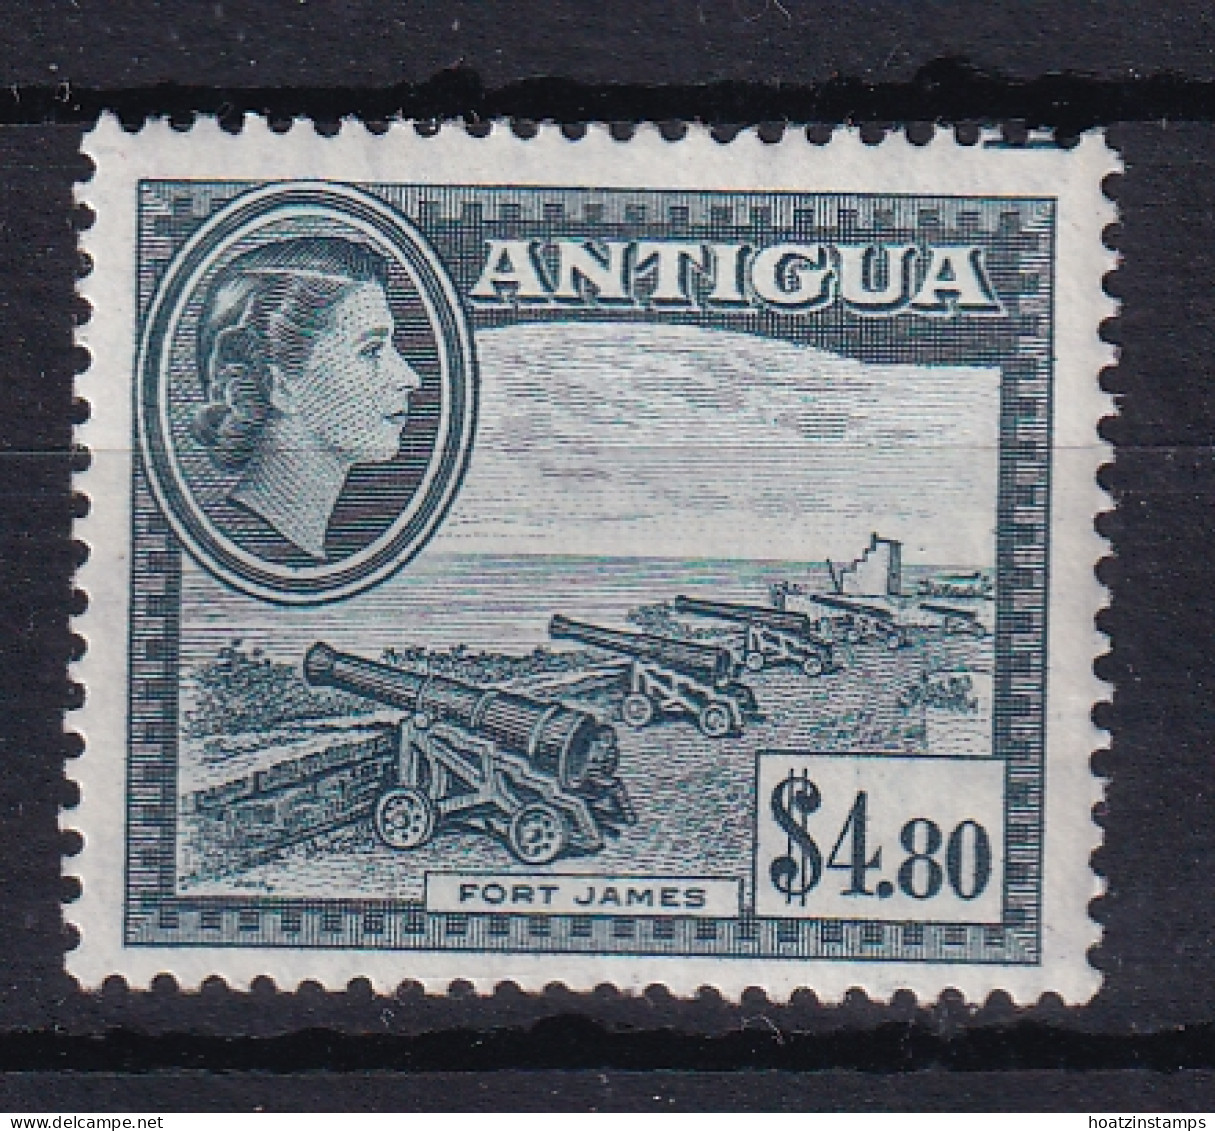 Antigua: 1953/62   QE II - Pictorial     SG134    $4.80      MH - 1858-1960 Colonia Británica